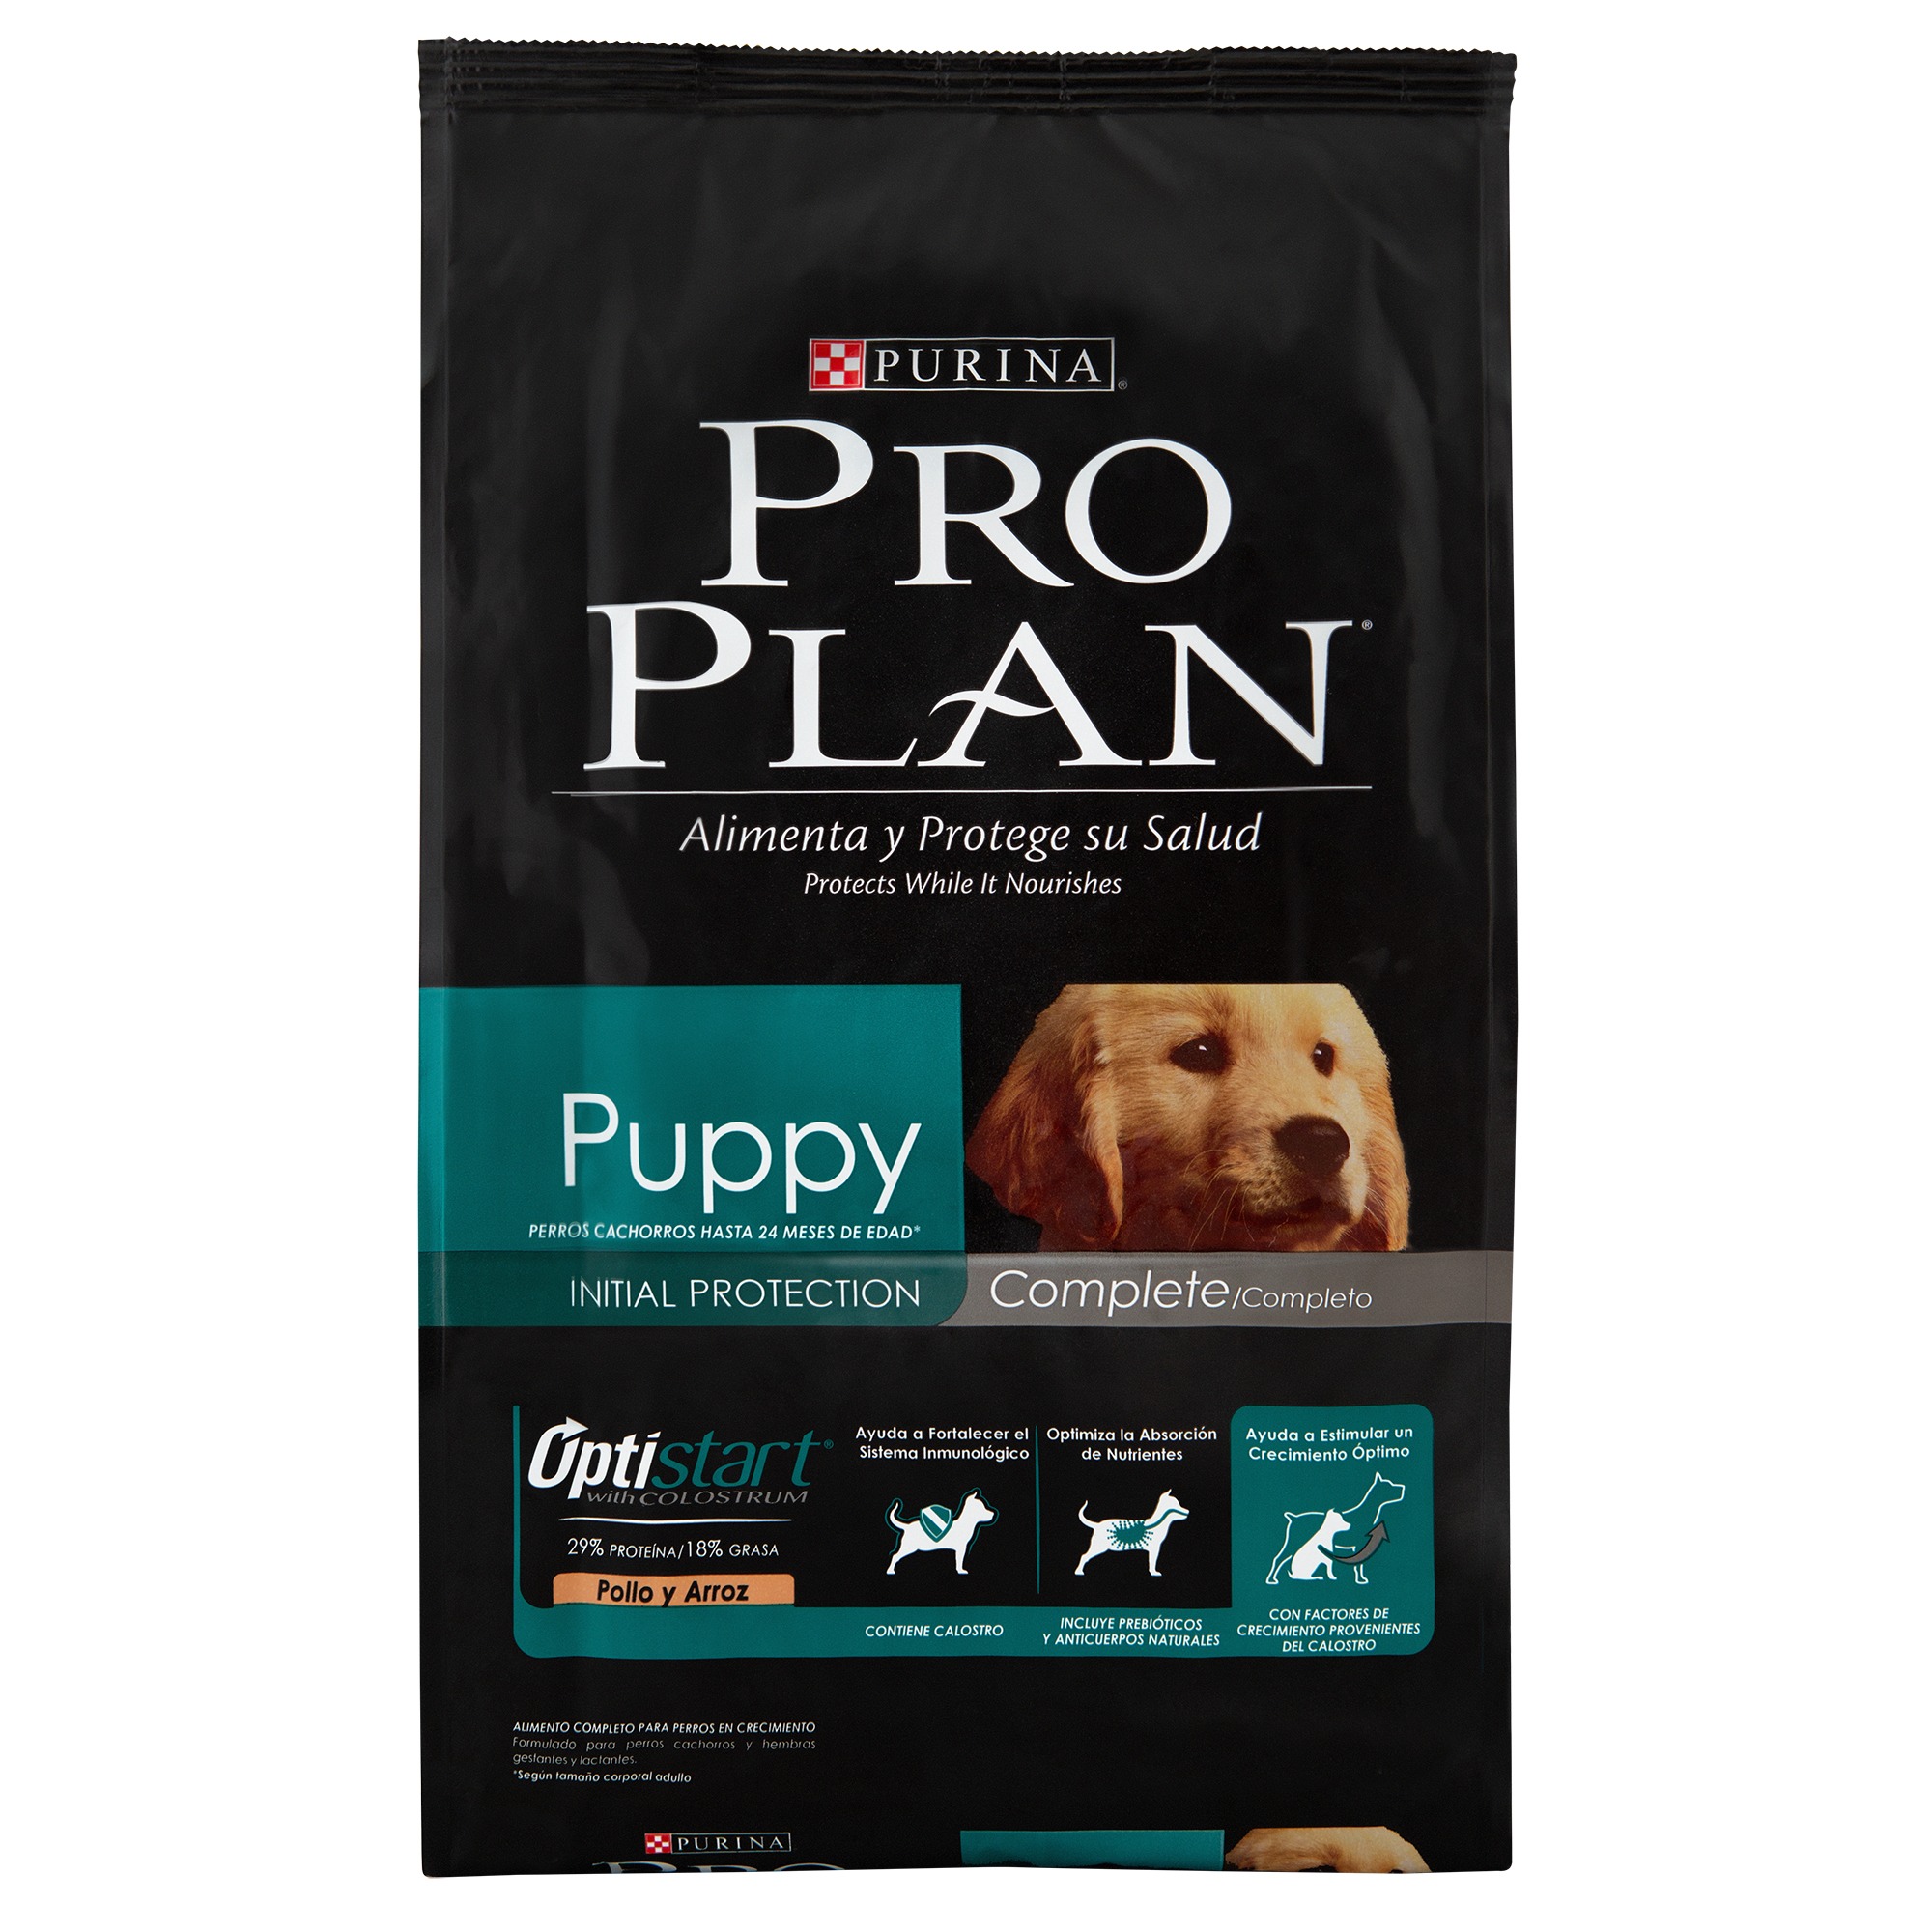 Pro plan puppy